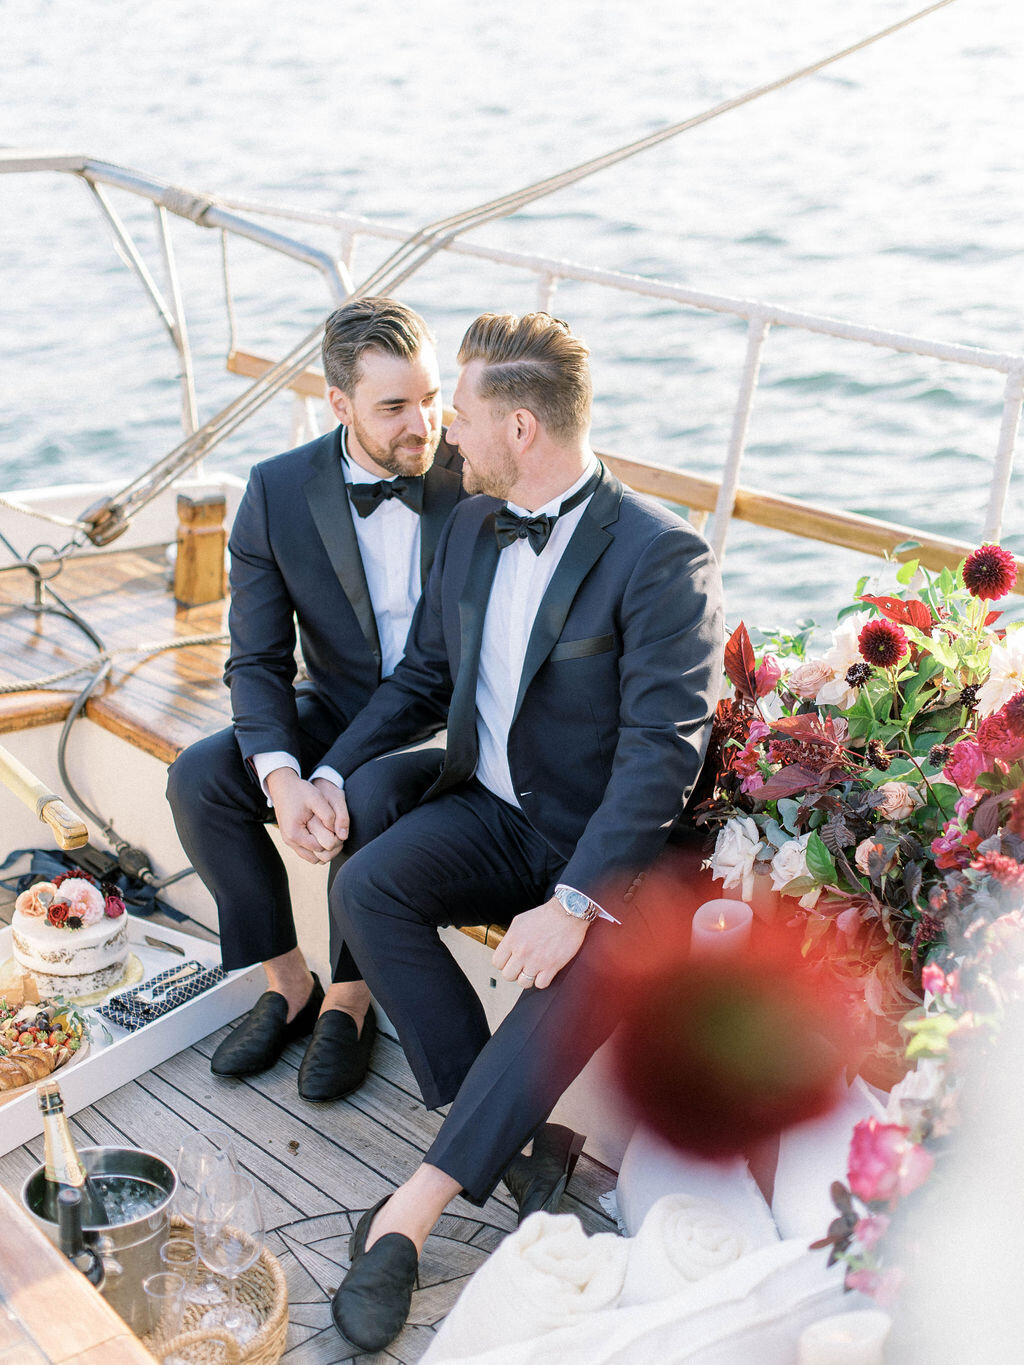 Kate-Murtaugh-Events-Boston-Harbor-sail-boat-yacht-elopement-wedding-planner-grooms